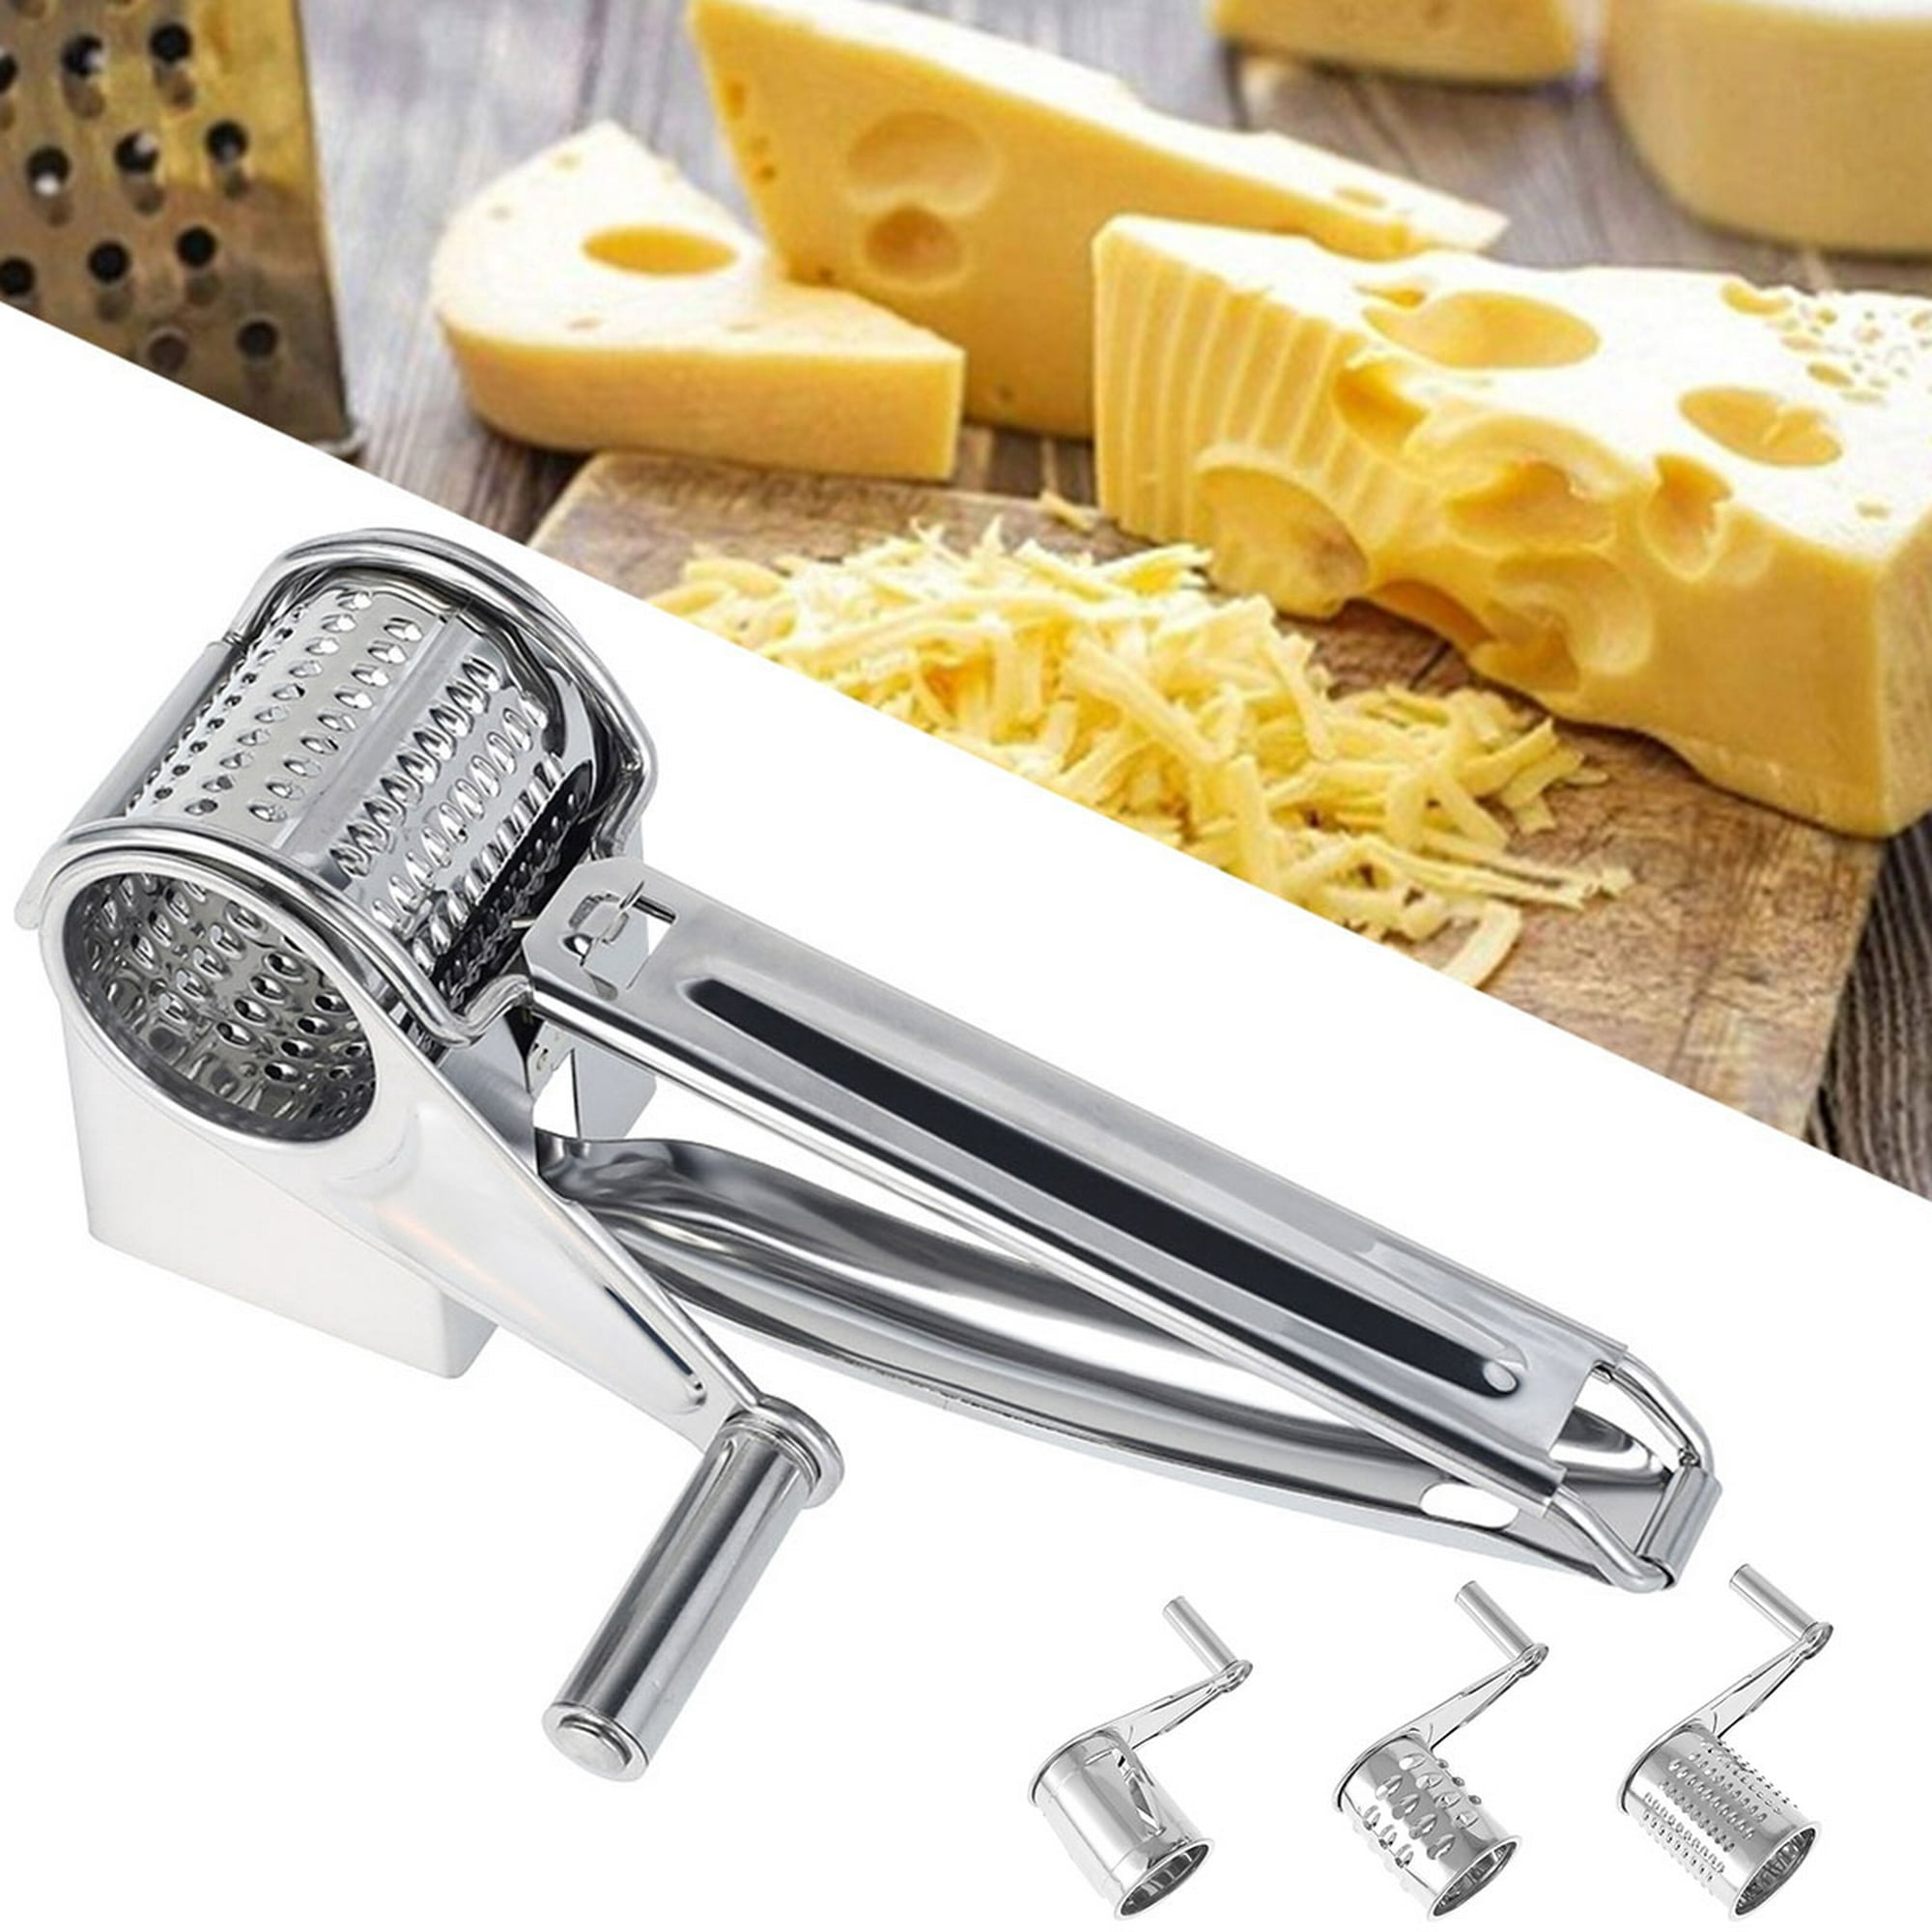 Rallador de queso rotativo, rallador de queso 5 en 1 con asa, cuchillas  inoxidables reemplazables, cortador de queso, rallador de queso, manivela  de